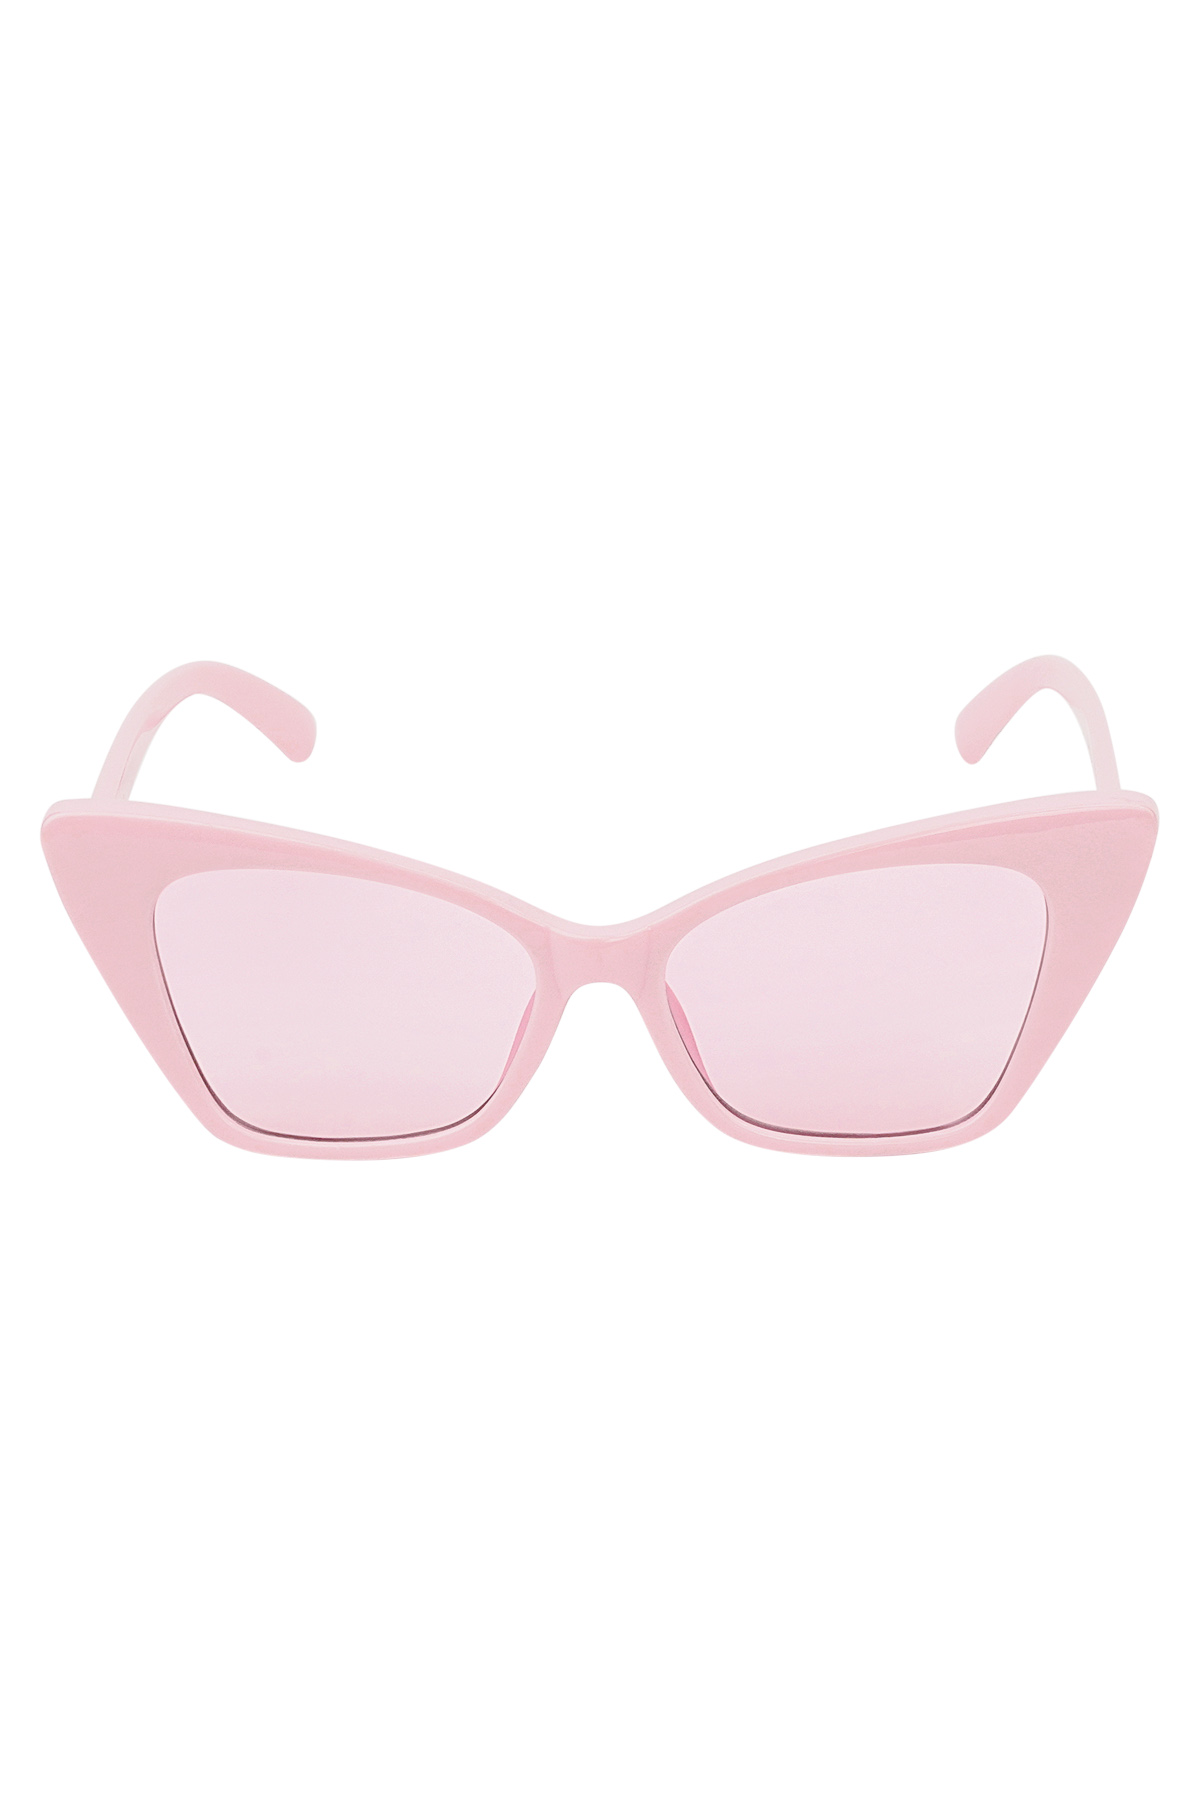 Sunglasses monochrome frame - pink Picture7